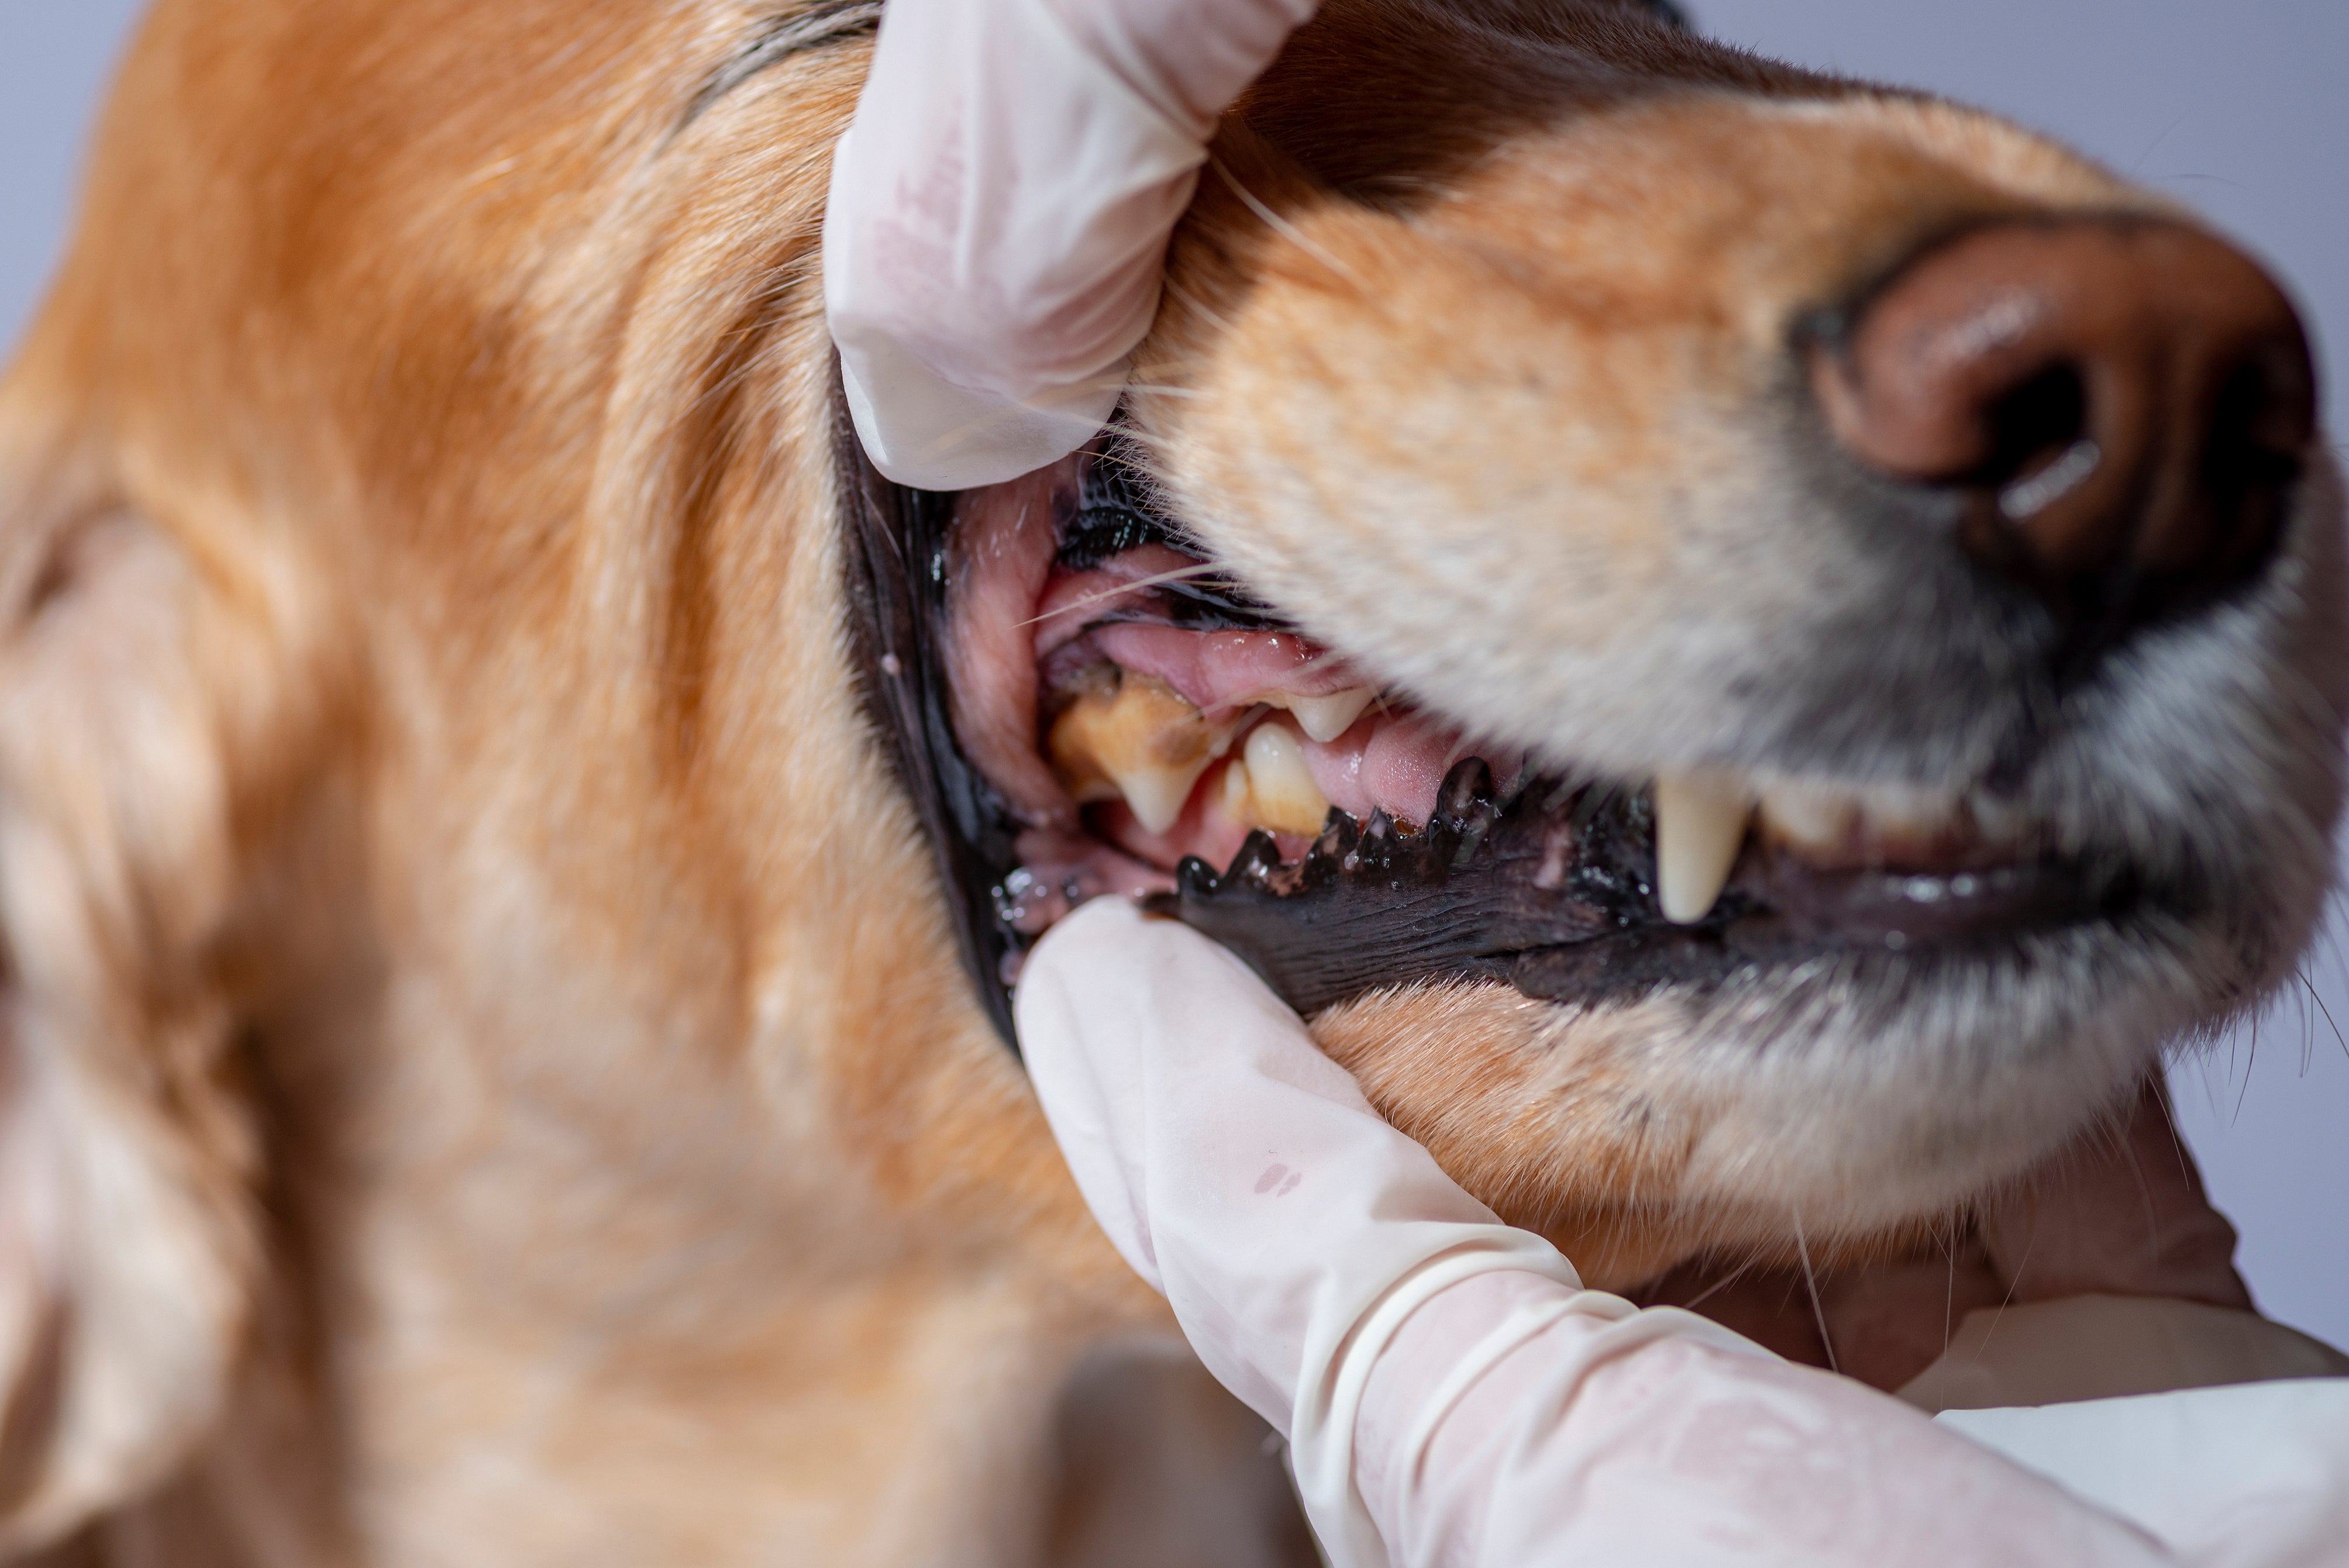 severe periodontal disease dogs